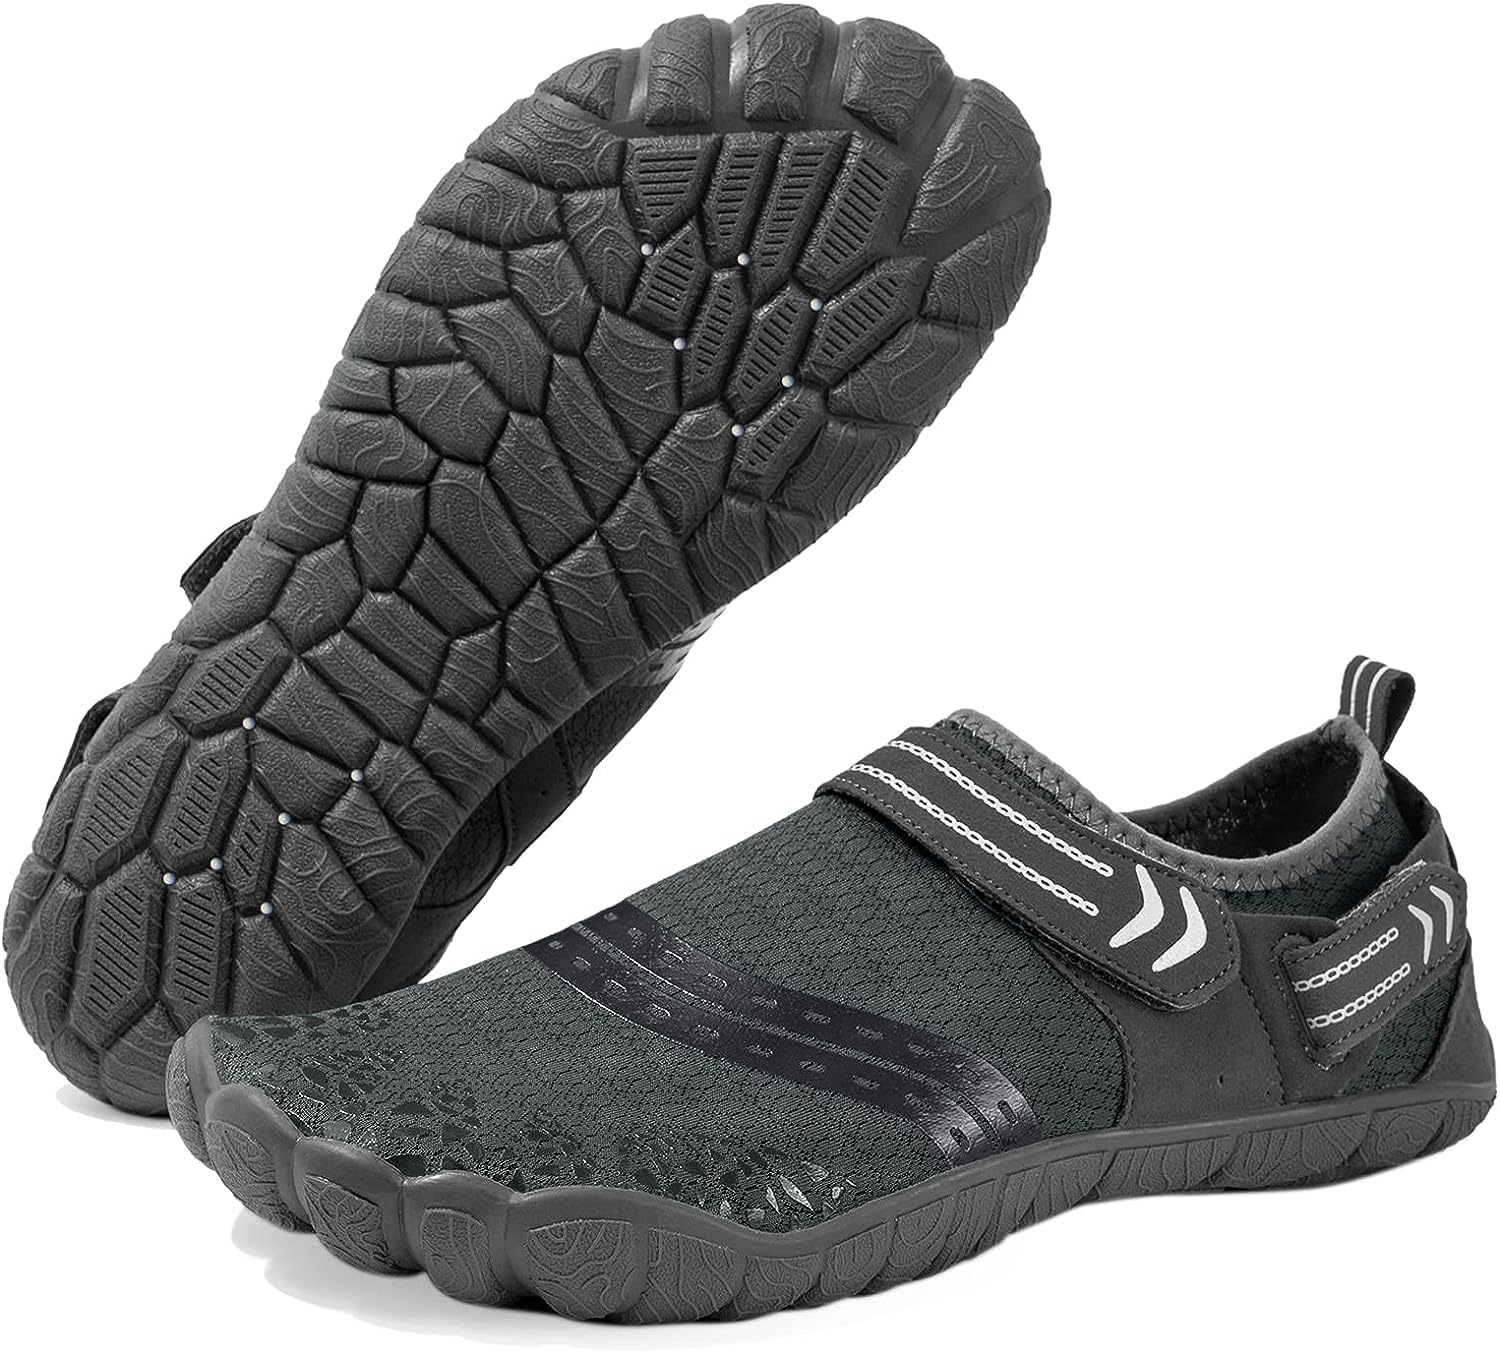 Josaywin Water Shoes for Men Quick Dry Wide Toe Aqua [...]